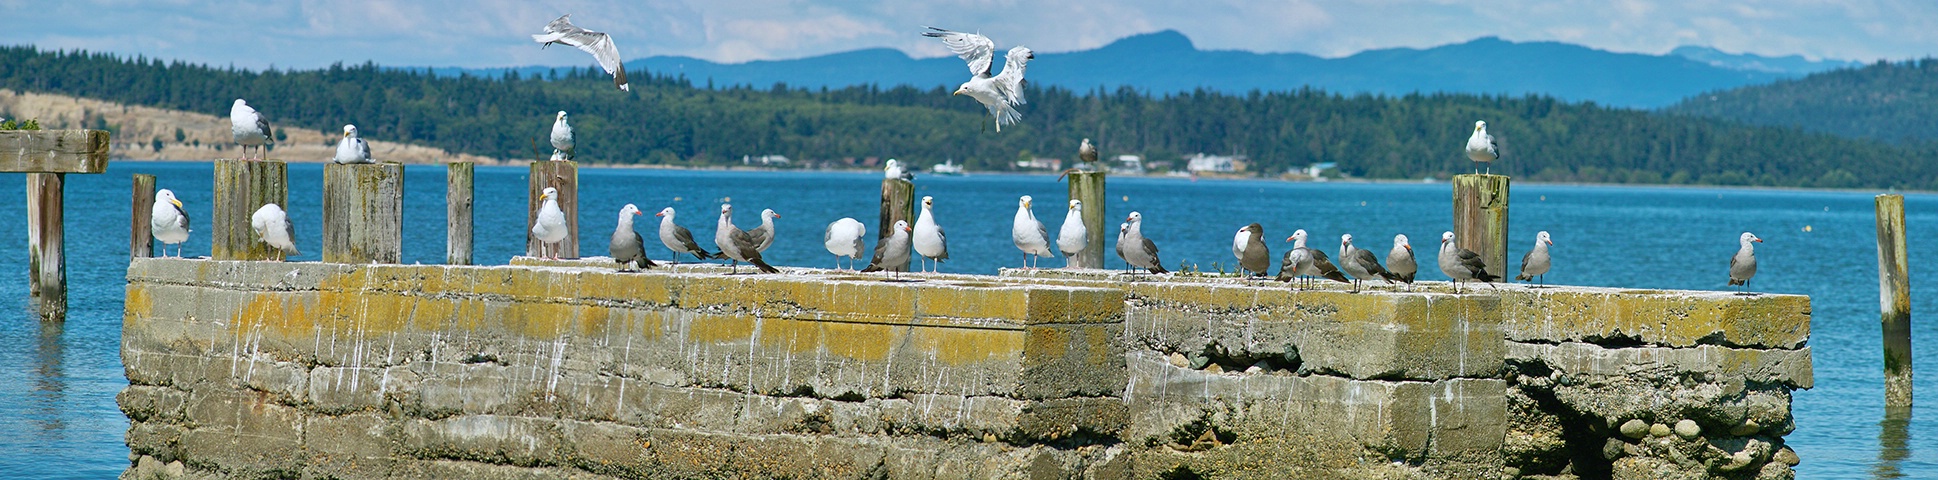 <b>Anacortes Seagulls</b>